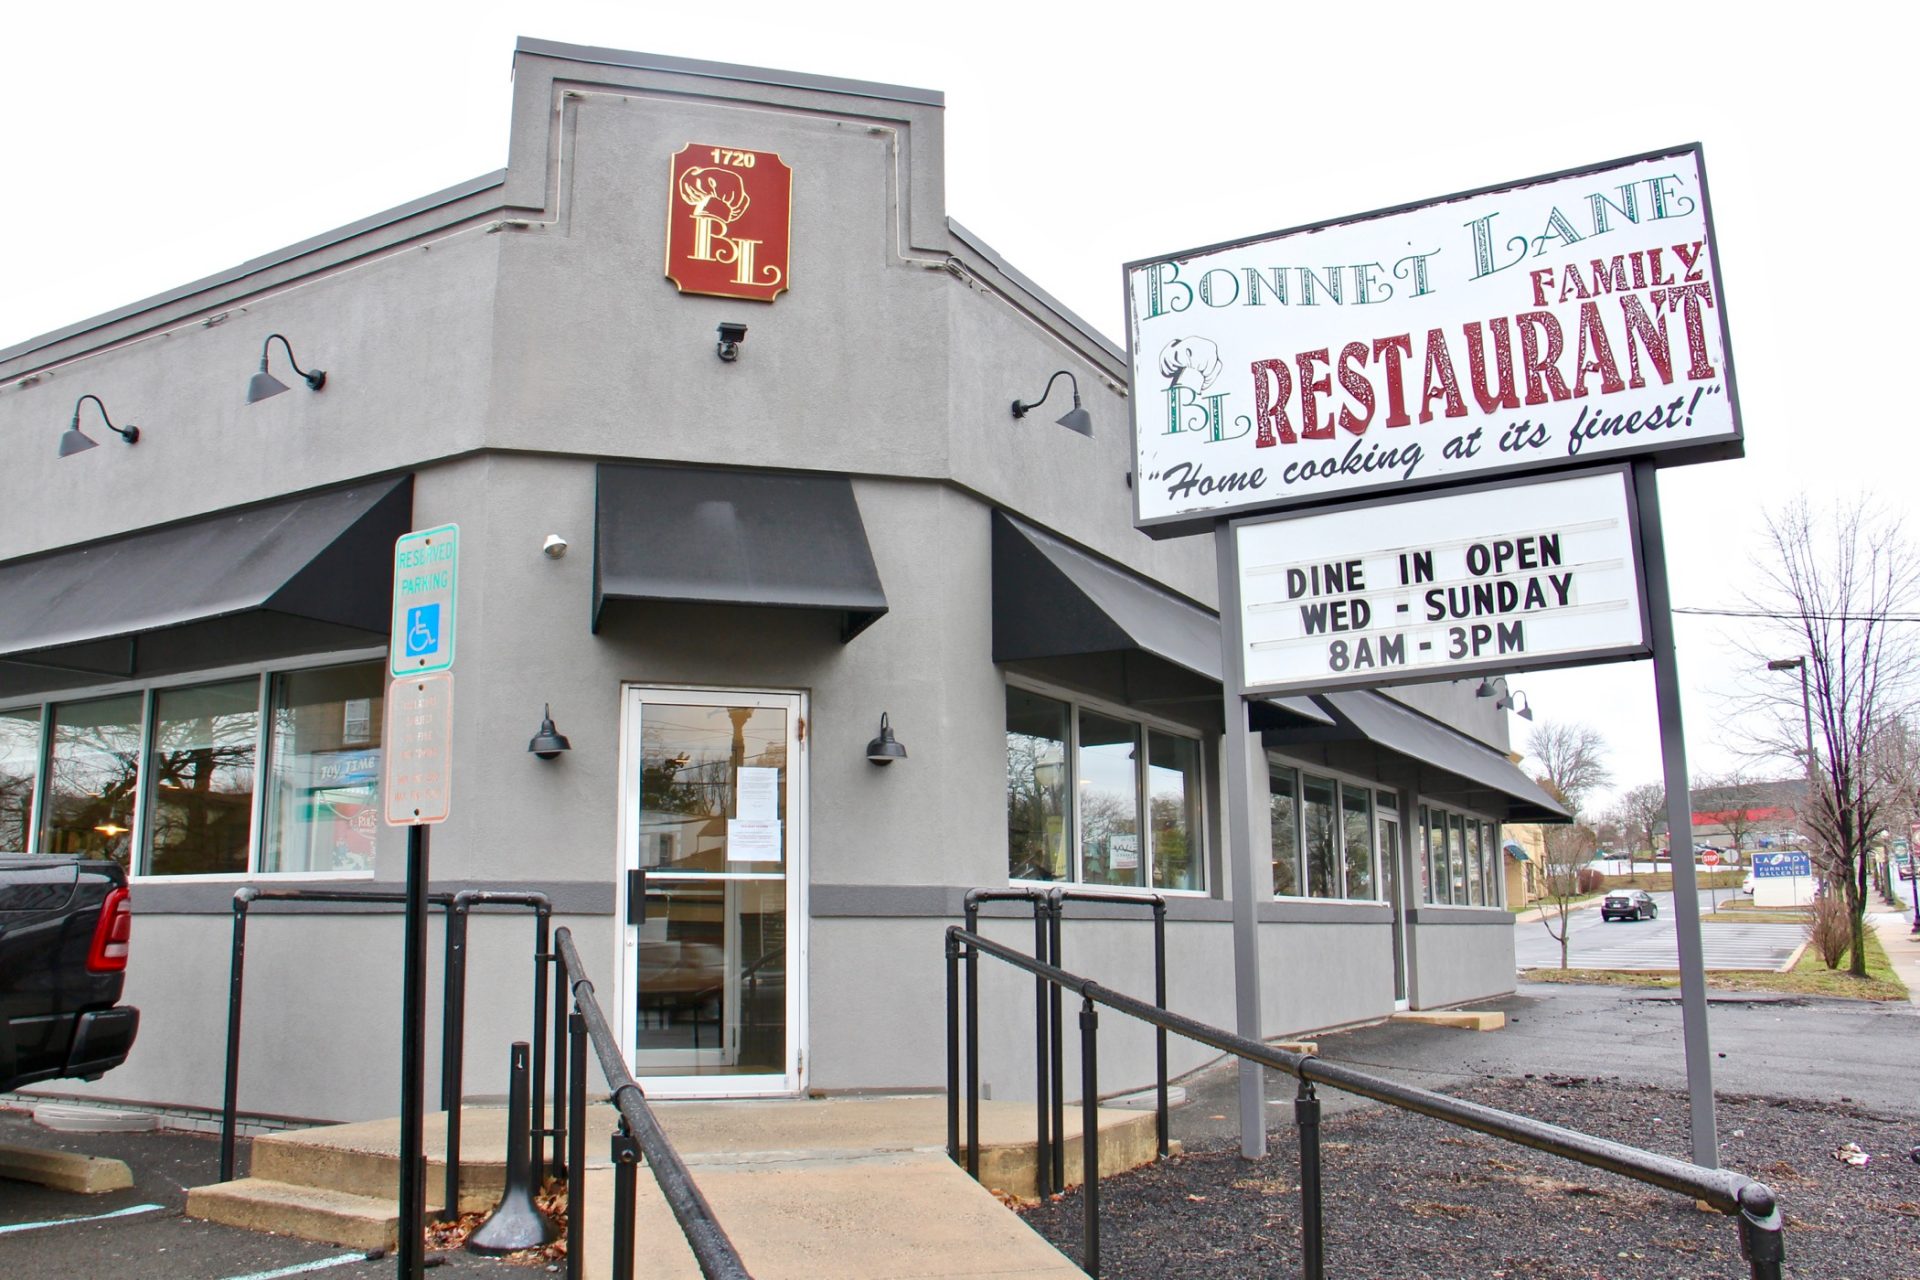 Bonnet Lane Family Restaurant in Abington, Pa., offers dine-in service despite the governor's order.